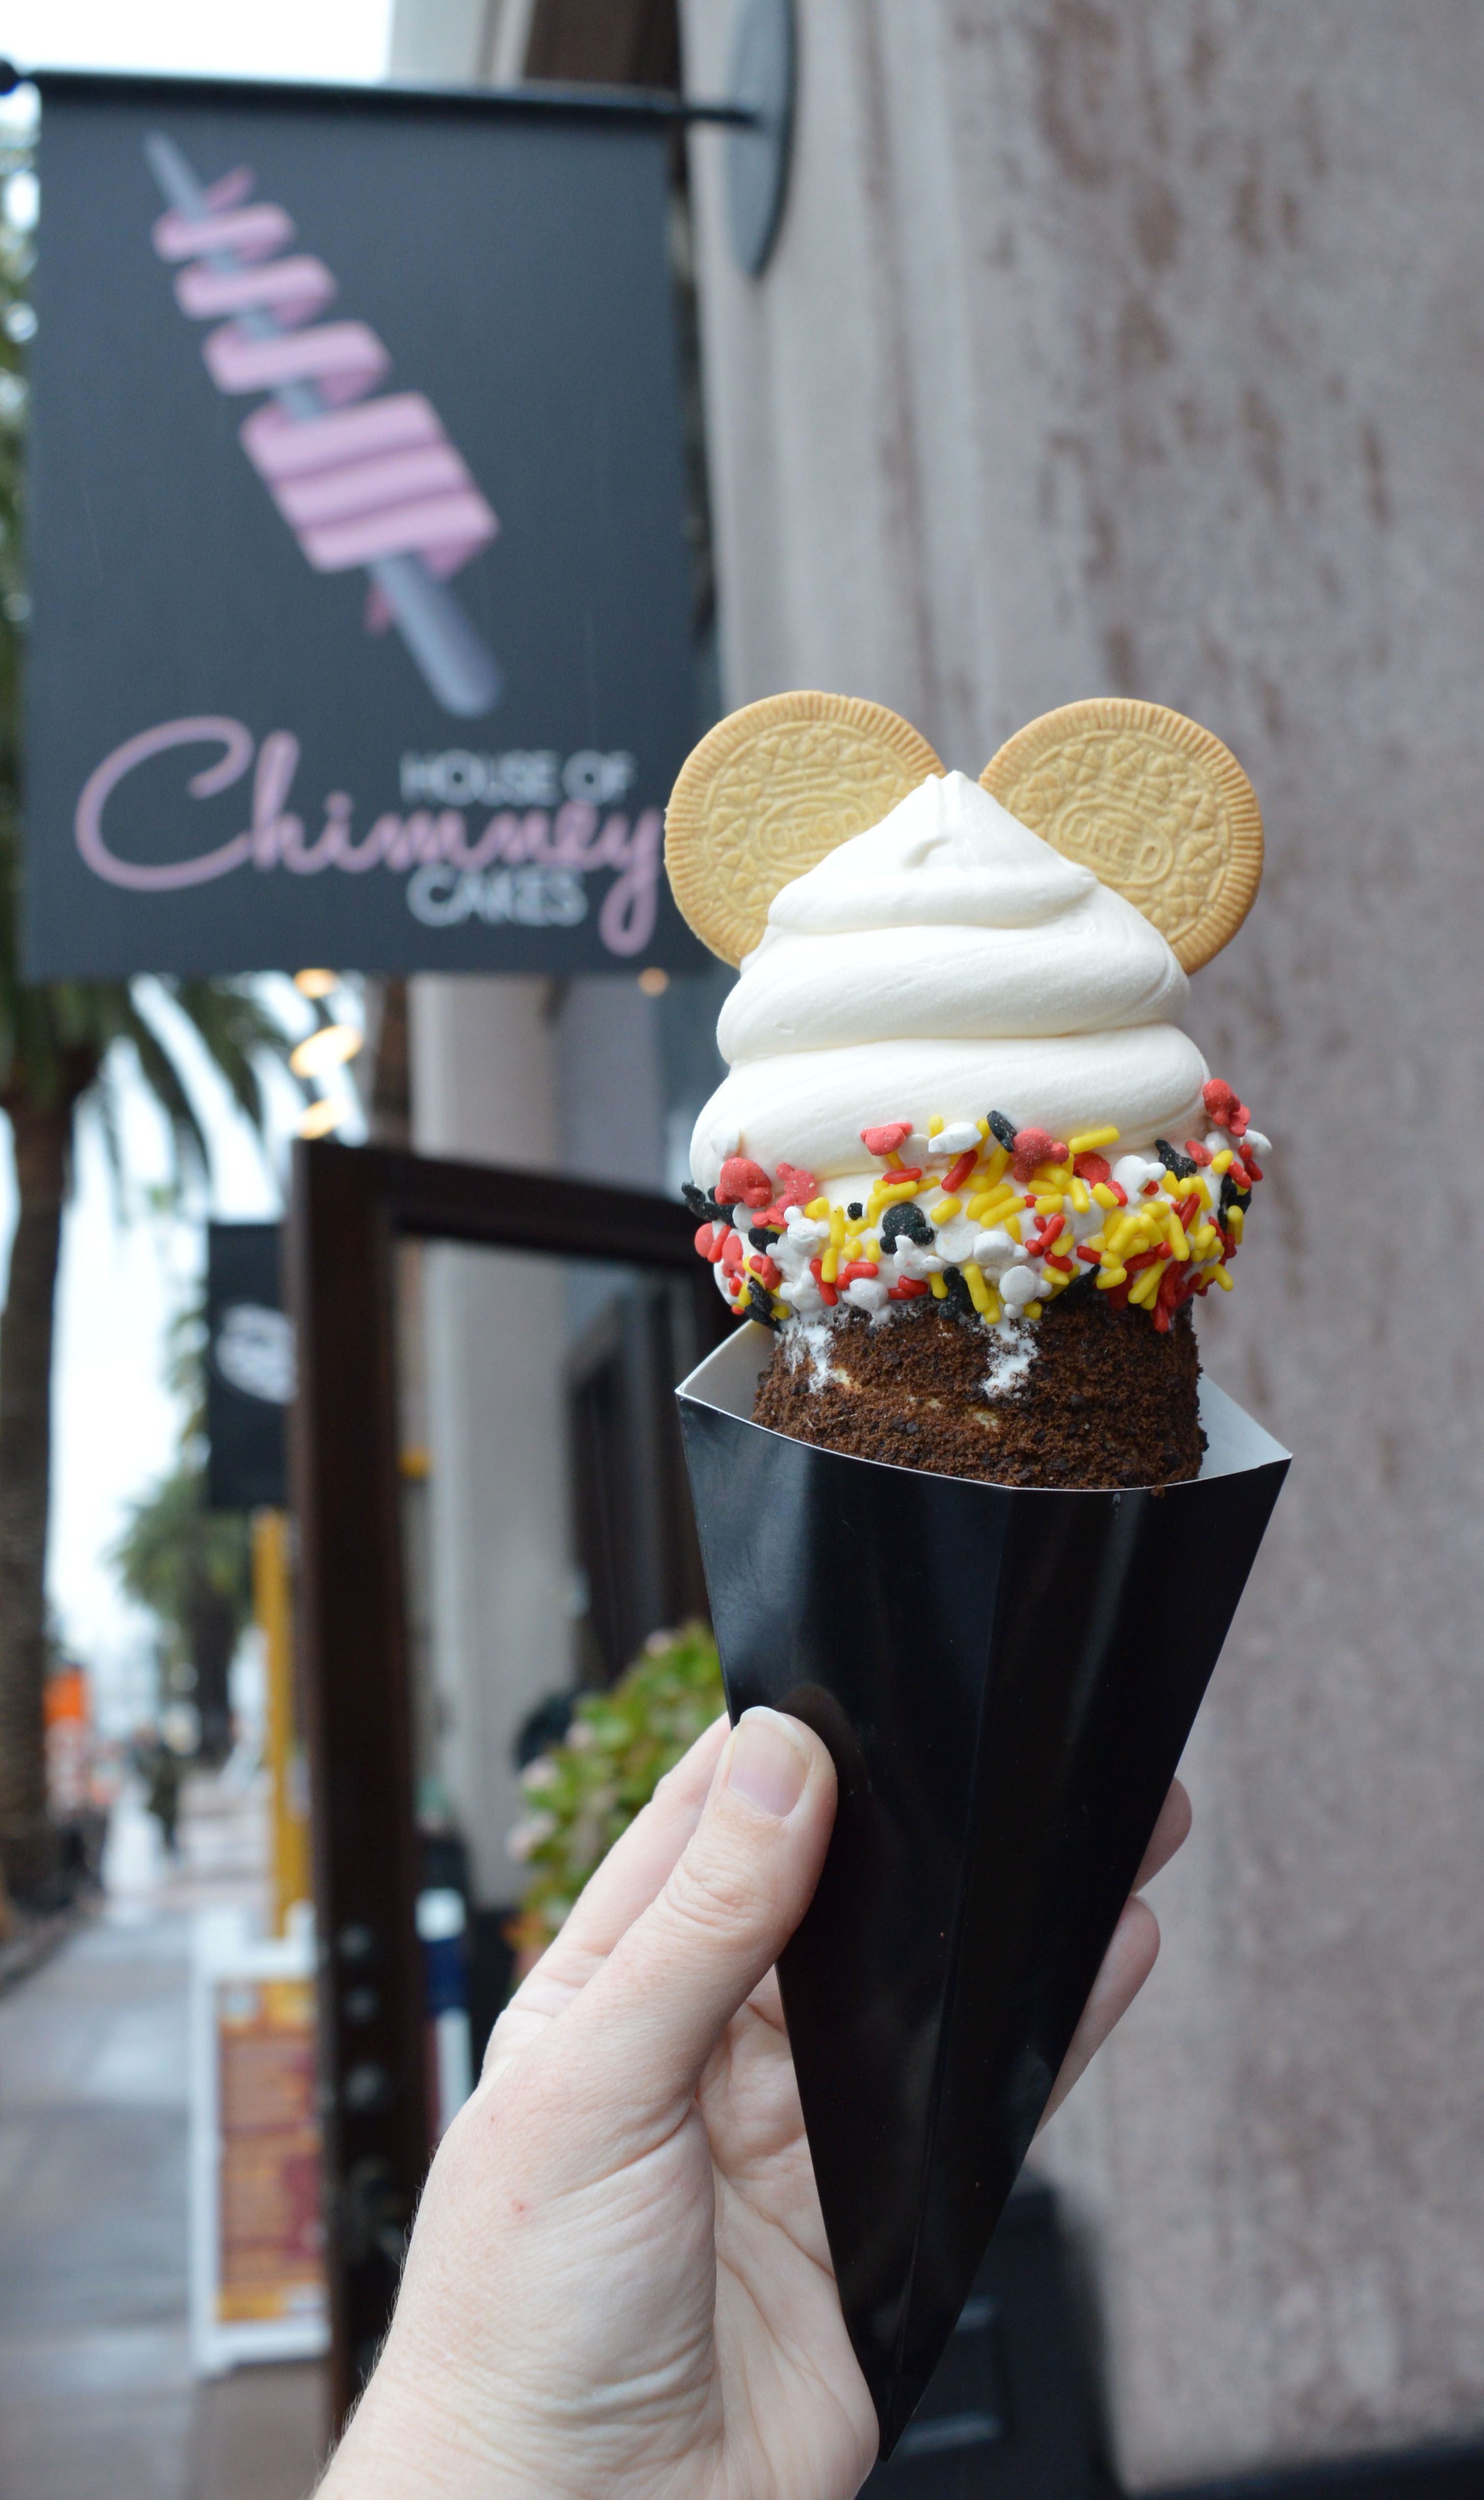 House of Chimney Cakes  Orange County's Best Chimney Cake Ice Cream We  Review It! 